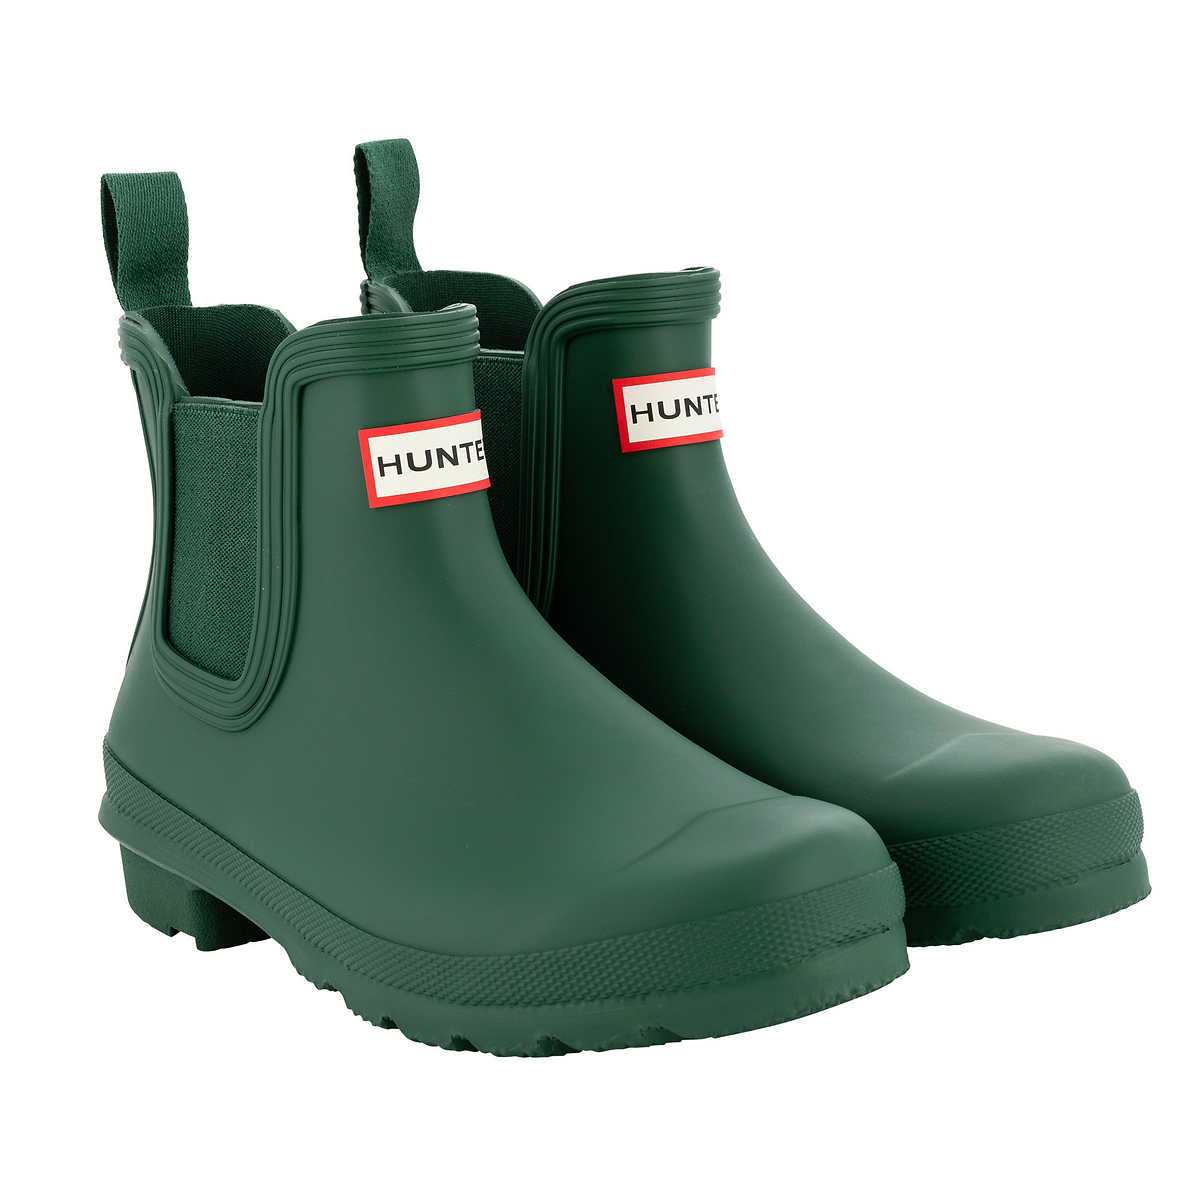 Hunter-bottes-mi-hautes-caoutchouc-femme-original-chelsea-boots-green-vert